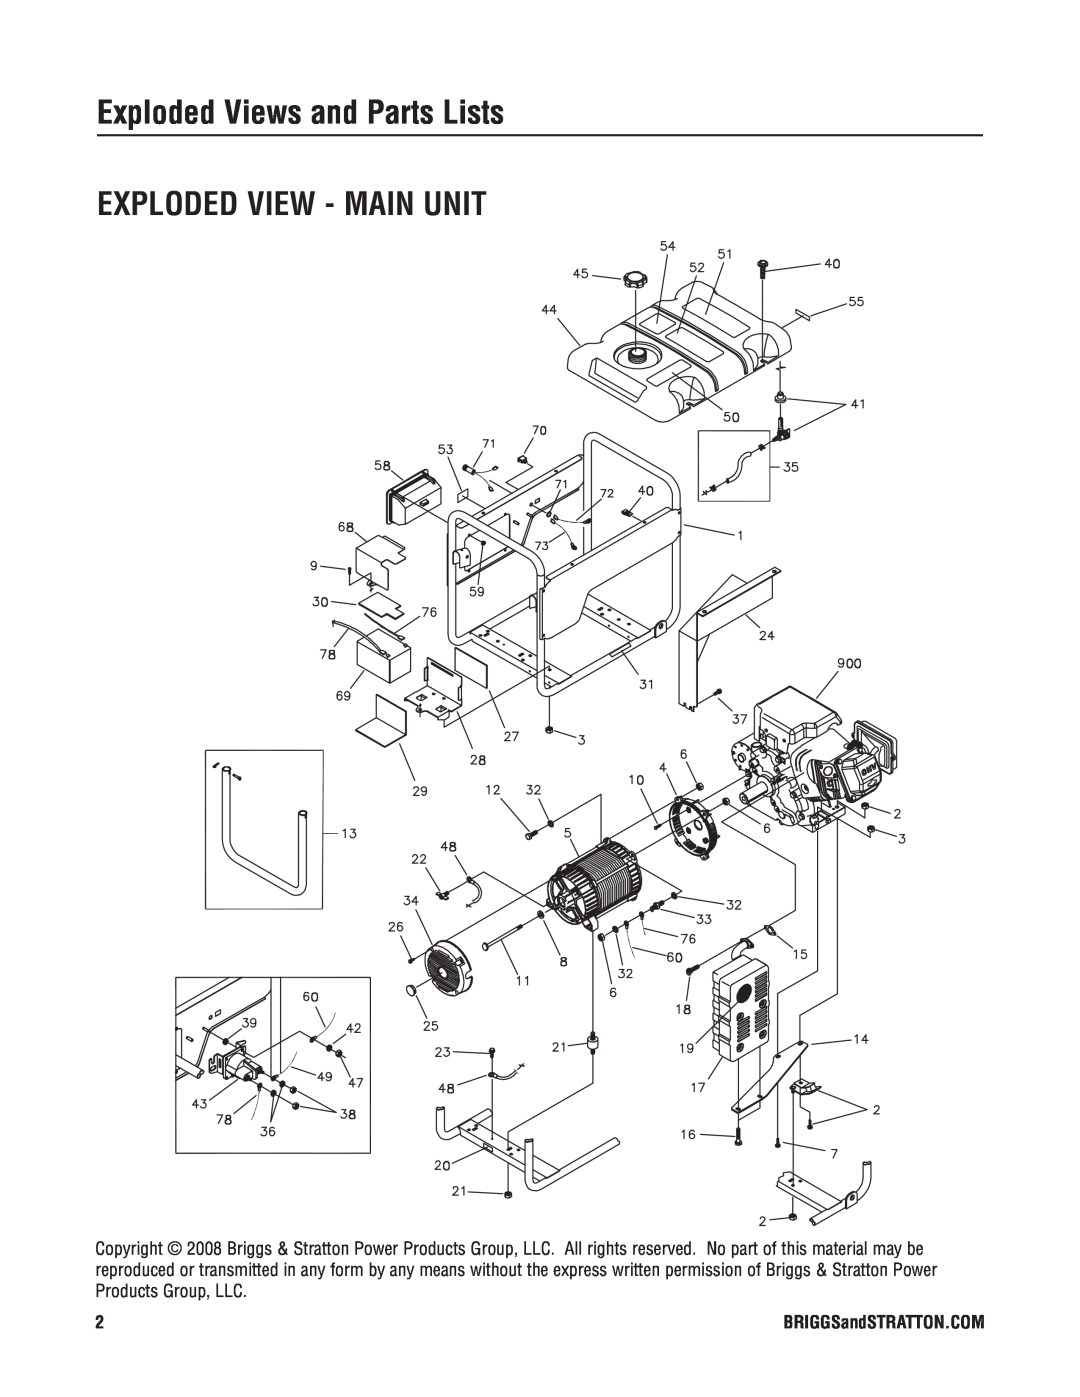 Briggs & Stratton 030380 manual Exploded Views and Parts Lists, Exploded View - Main Unit, BRIGGSandSTRATTON.COM 